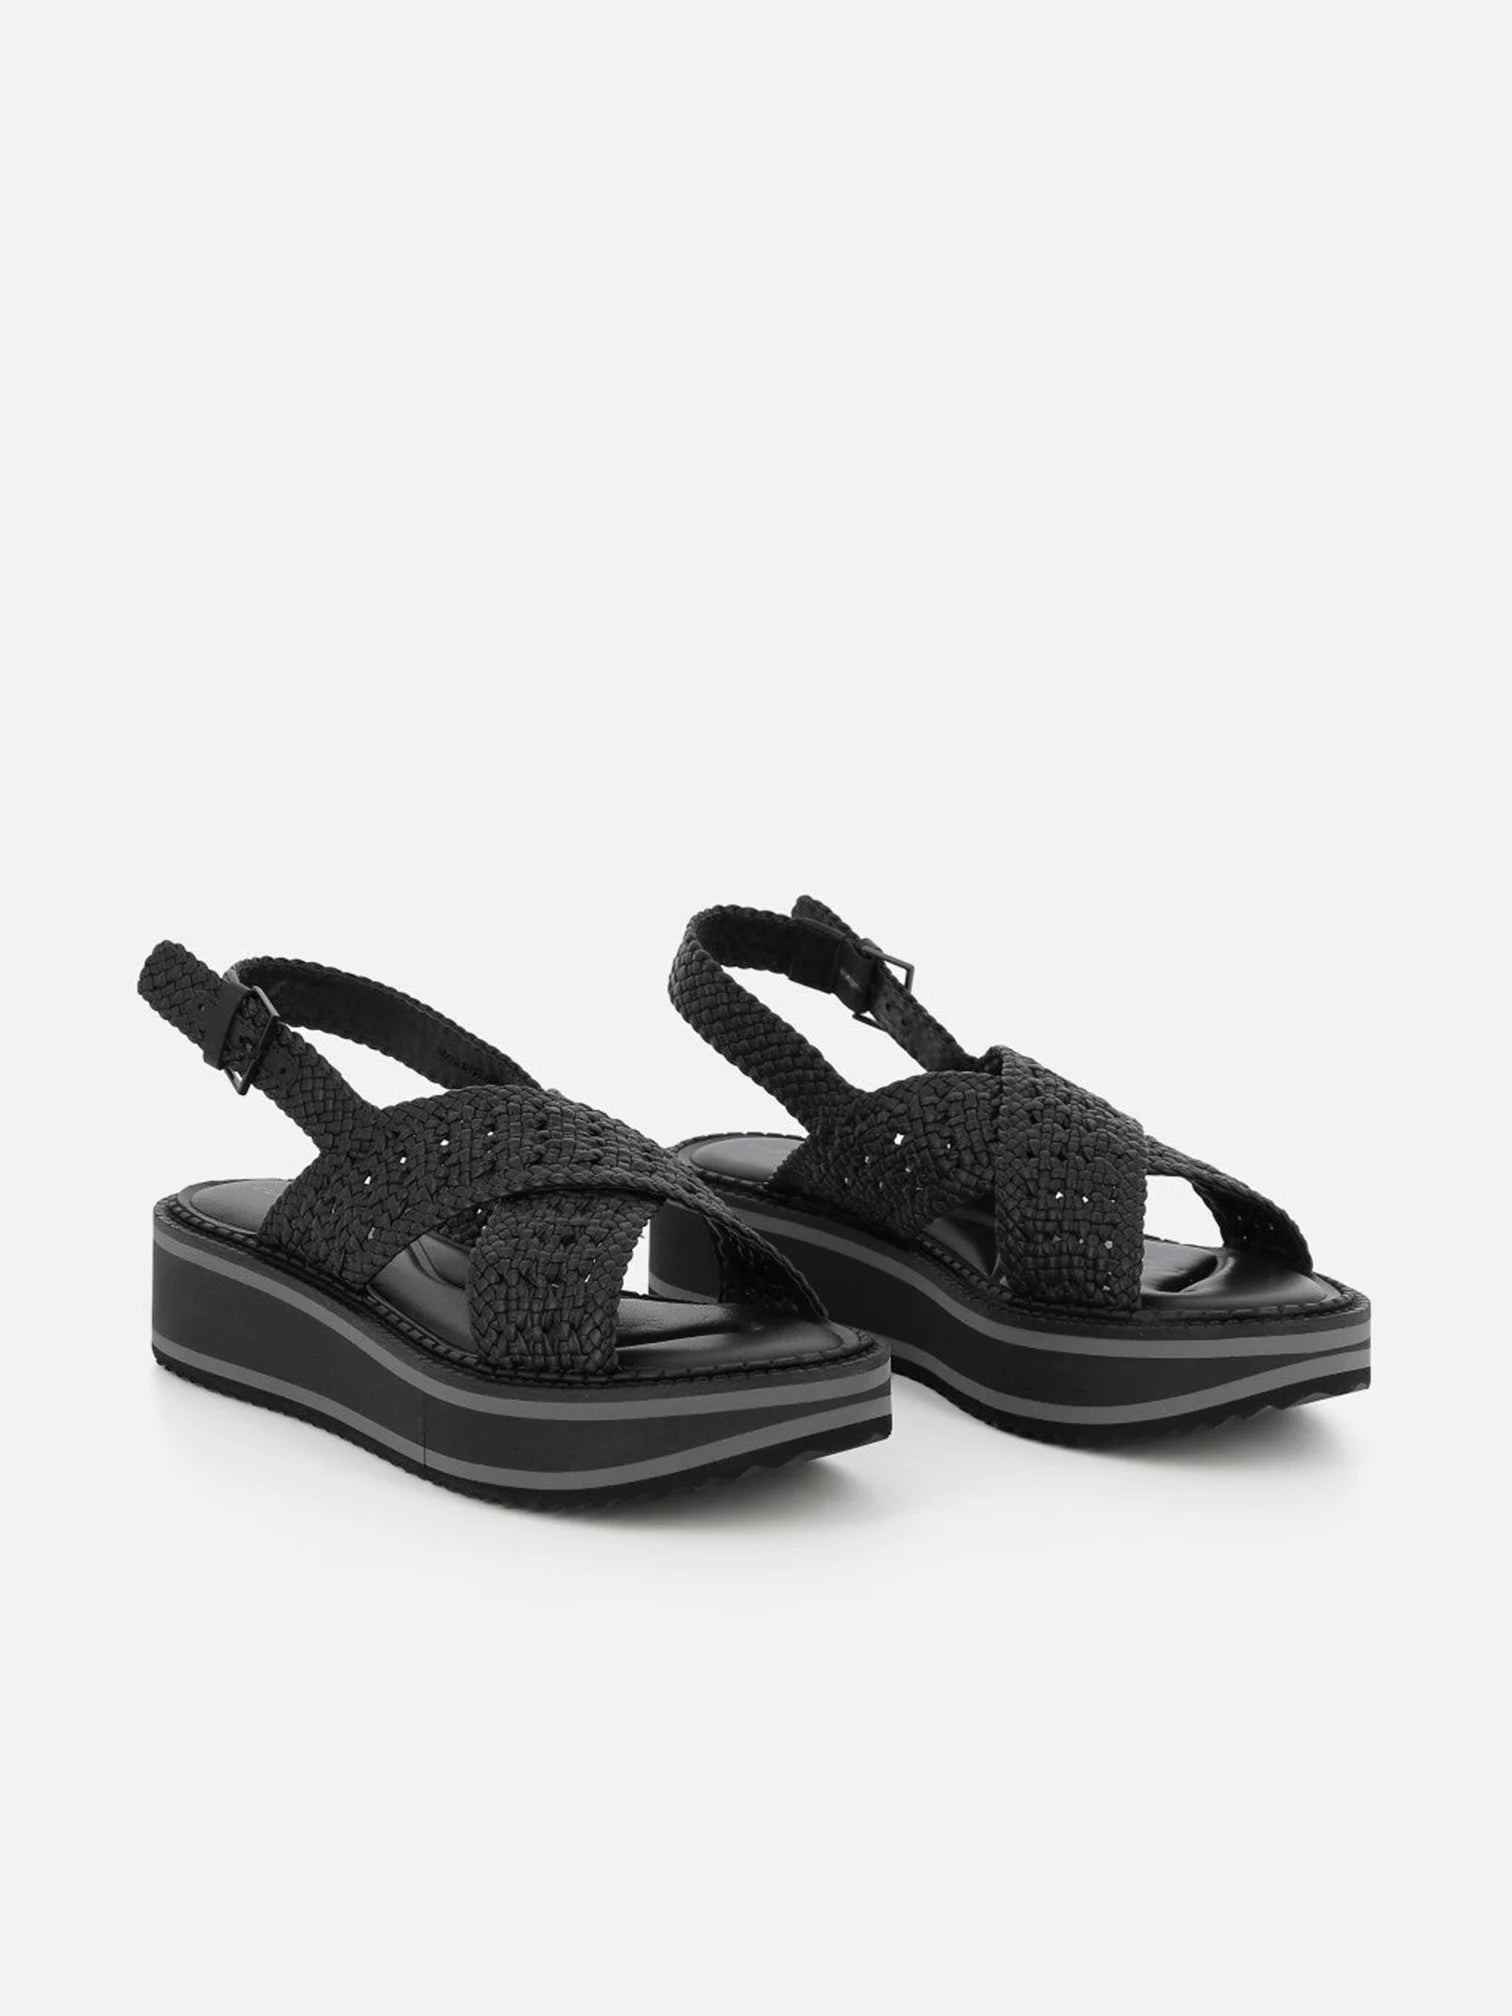 FRITZ sandals, nappa black || OUTLET